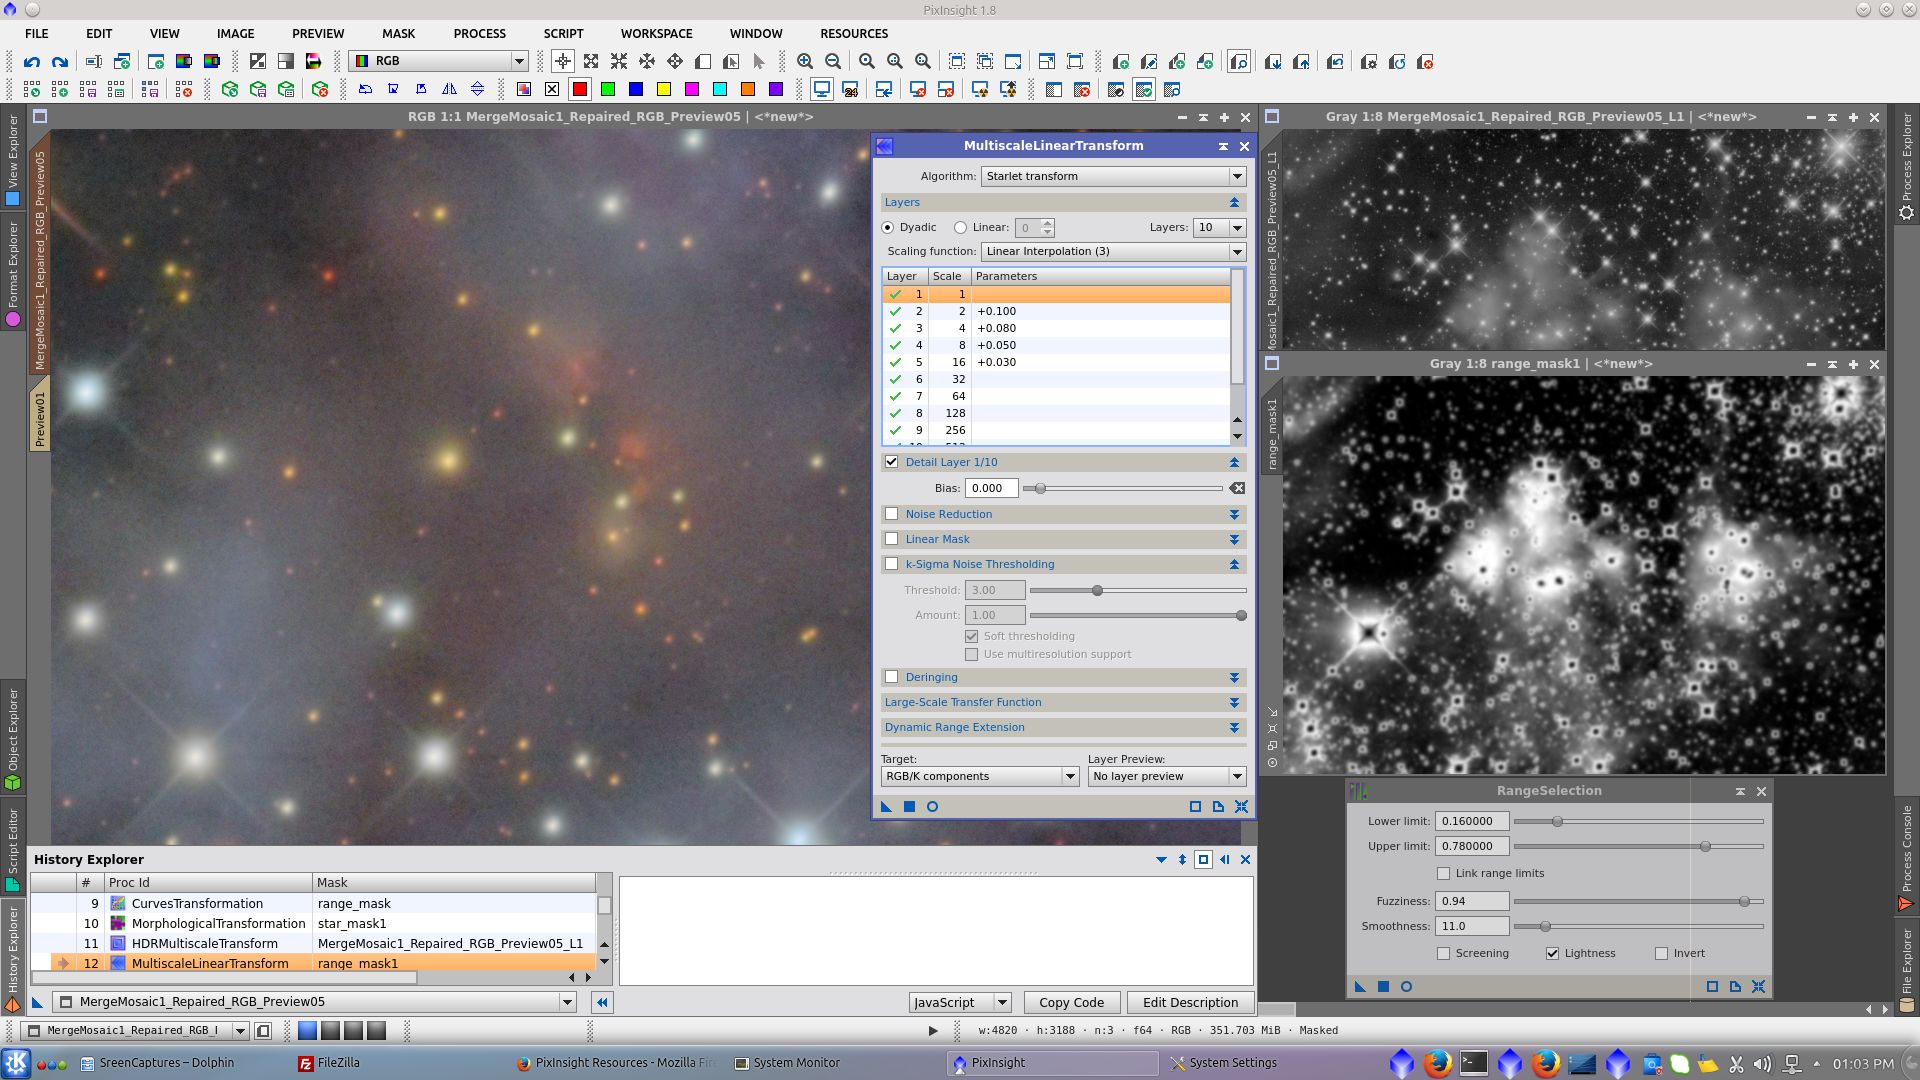 vdBH 15 Reflection Nebula